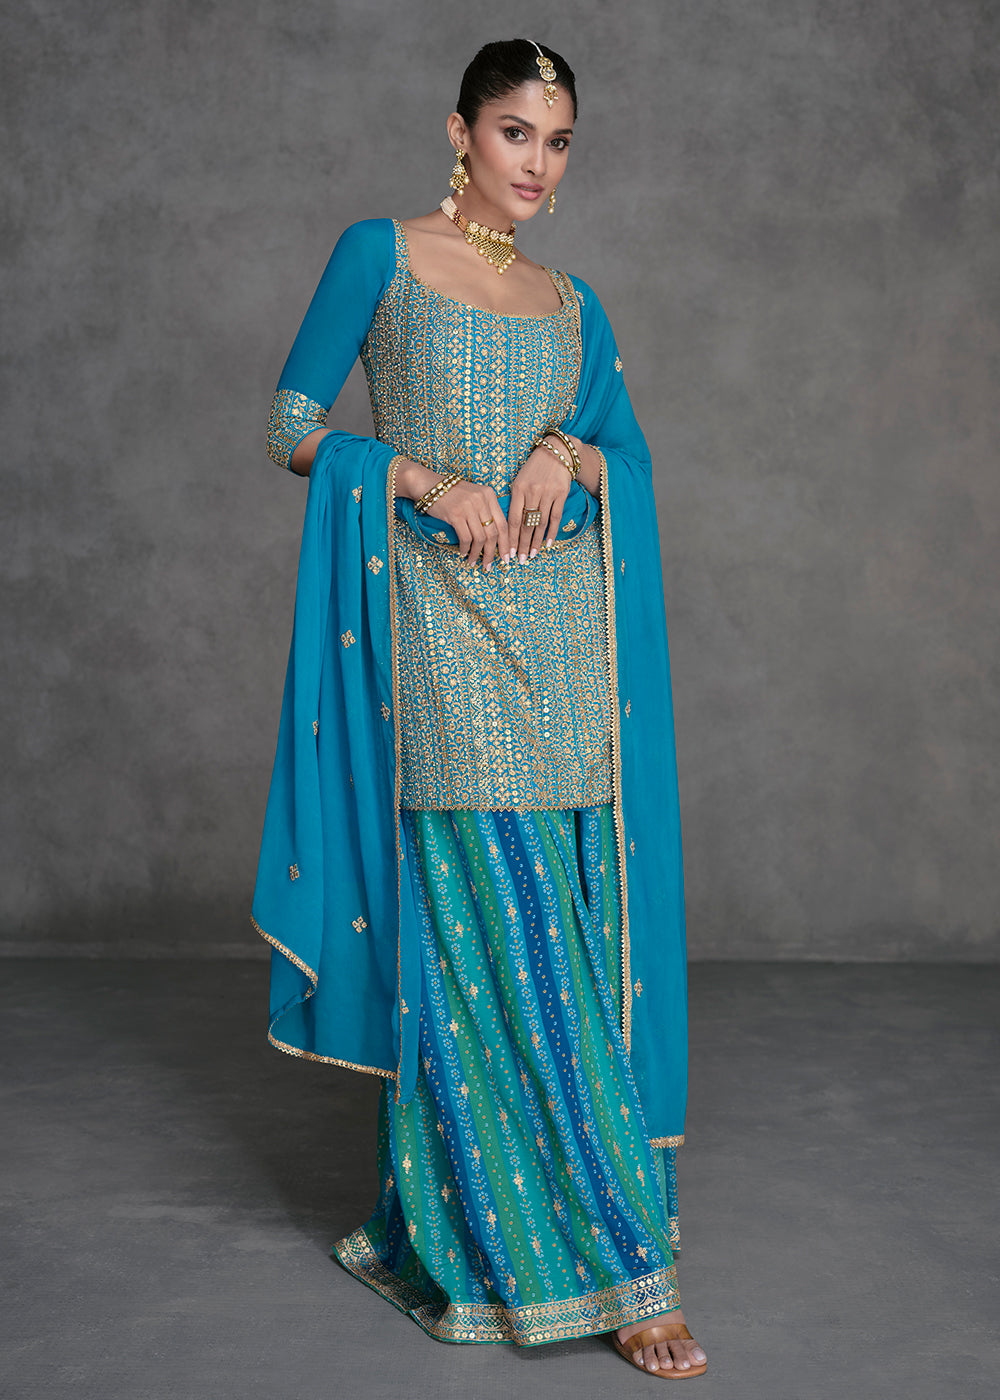 Shop Now Azure Blue Designer Style Wedding Wear Sharara Suit Online at Empress Clothing in USA, UK, Canada, Italy & Worldwide.